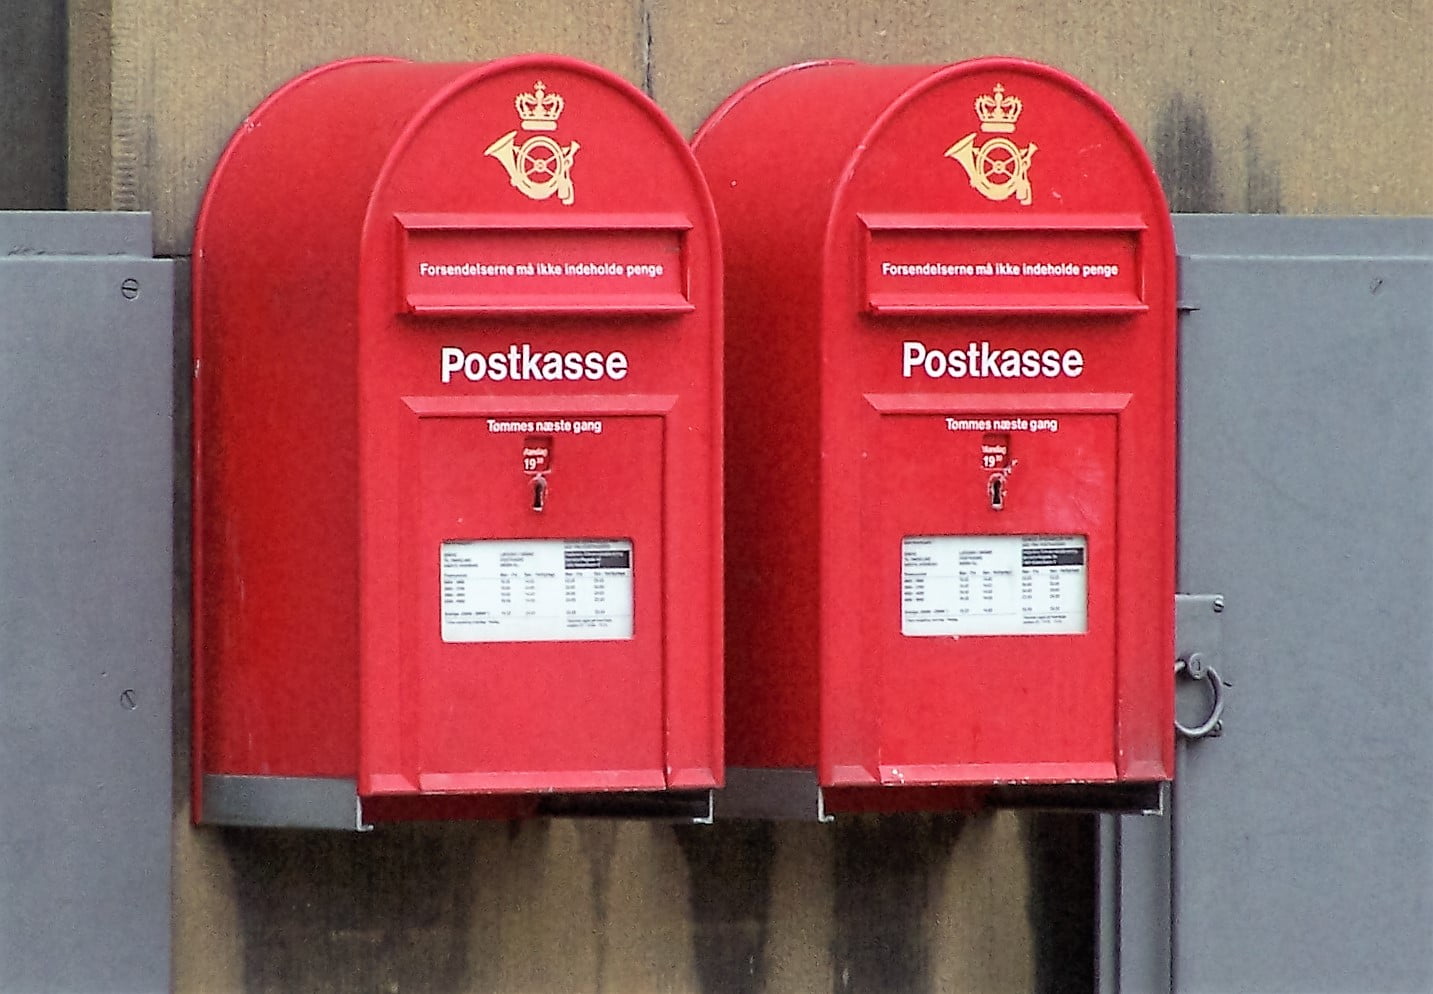 Dansk_postkasse